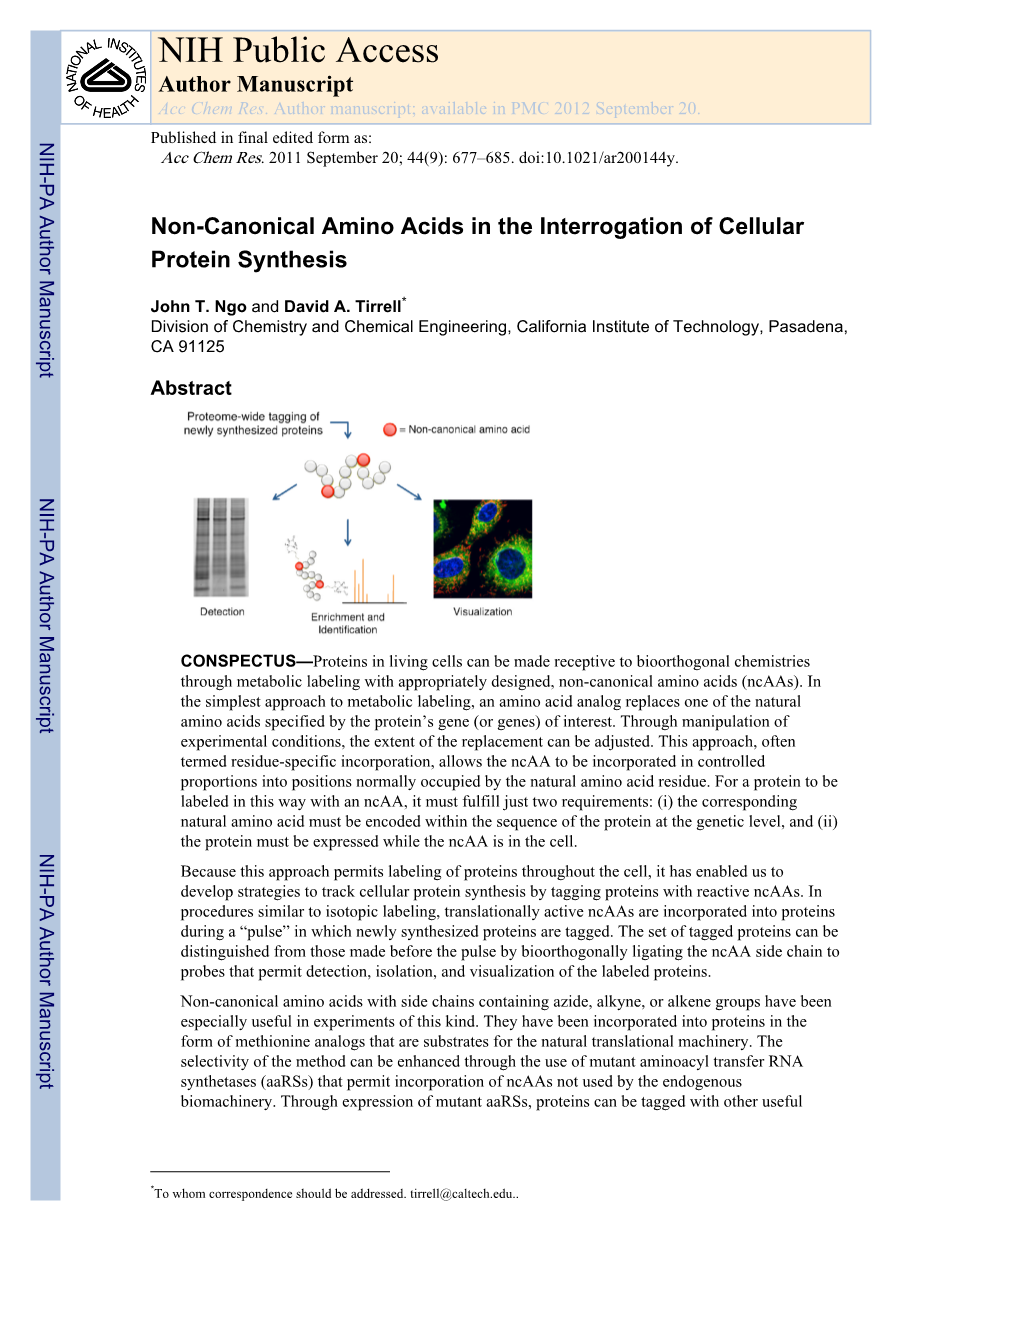 Noncanonical Amino Acids in the Interrogation of Cellular Protein